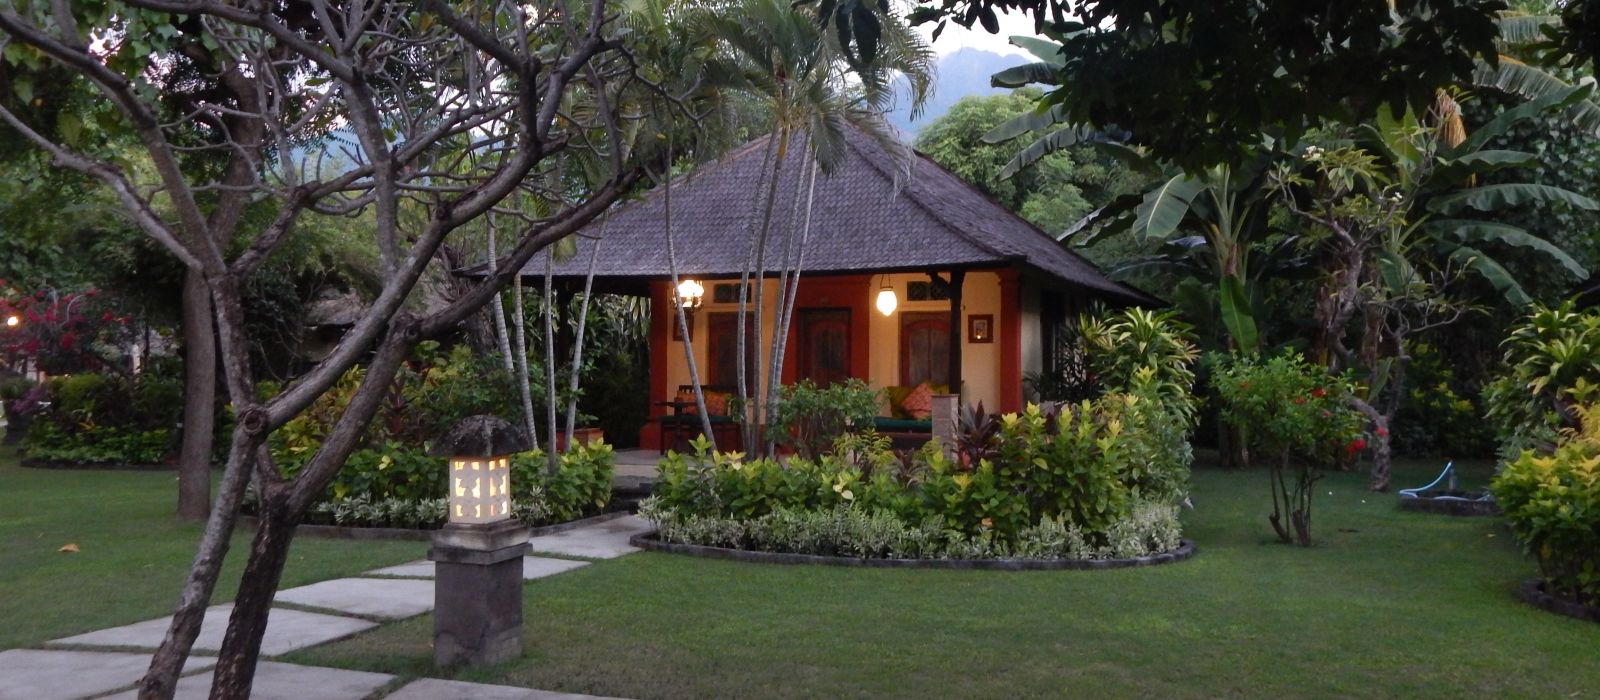  Taman  Sari  Bali  Resort  Spa  Enchanting Travels